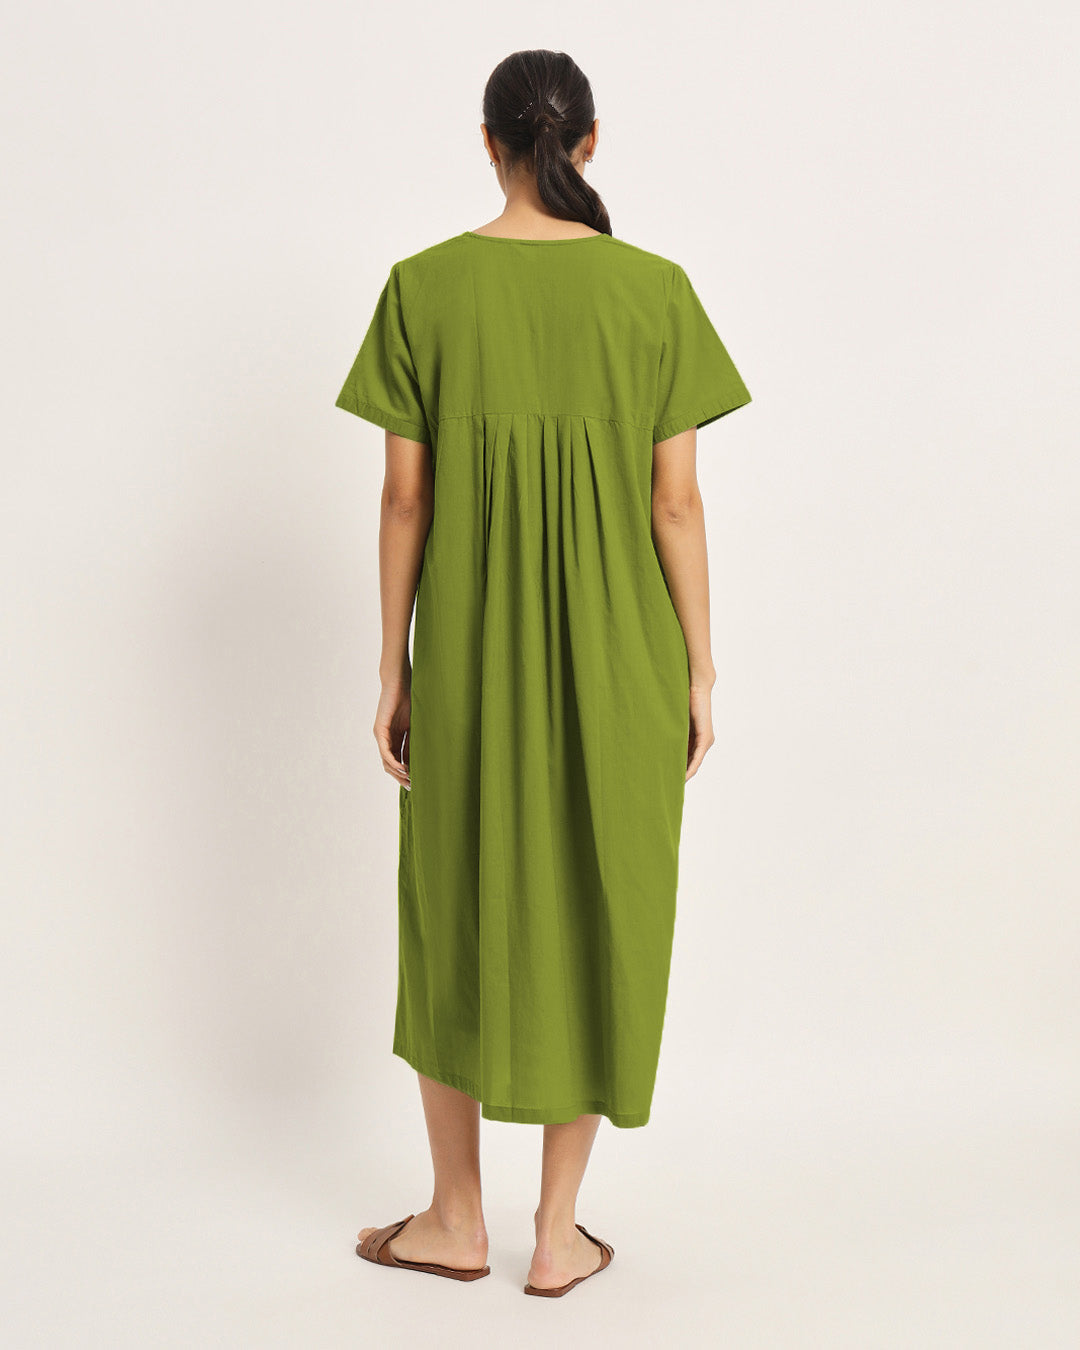 Combo: Iris Pink & Sage Green Bump Blessing Maternity & Nursing Dress - Set of 2